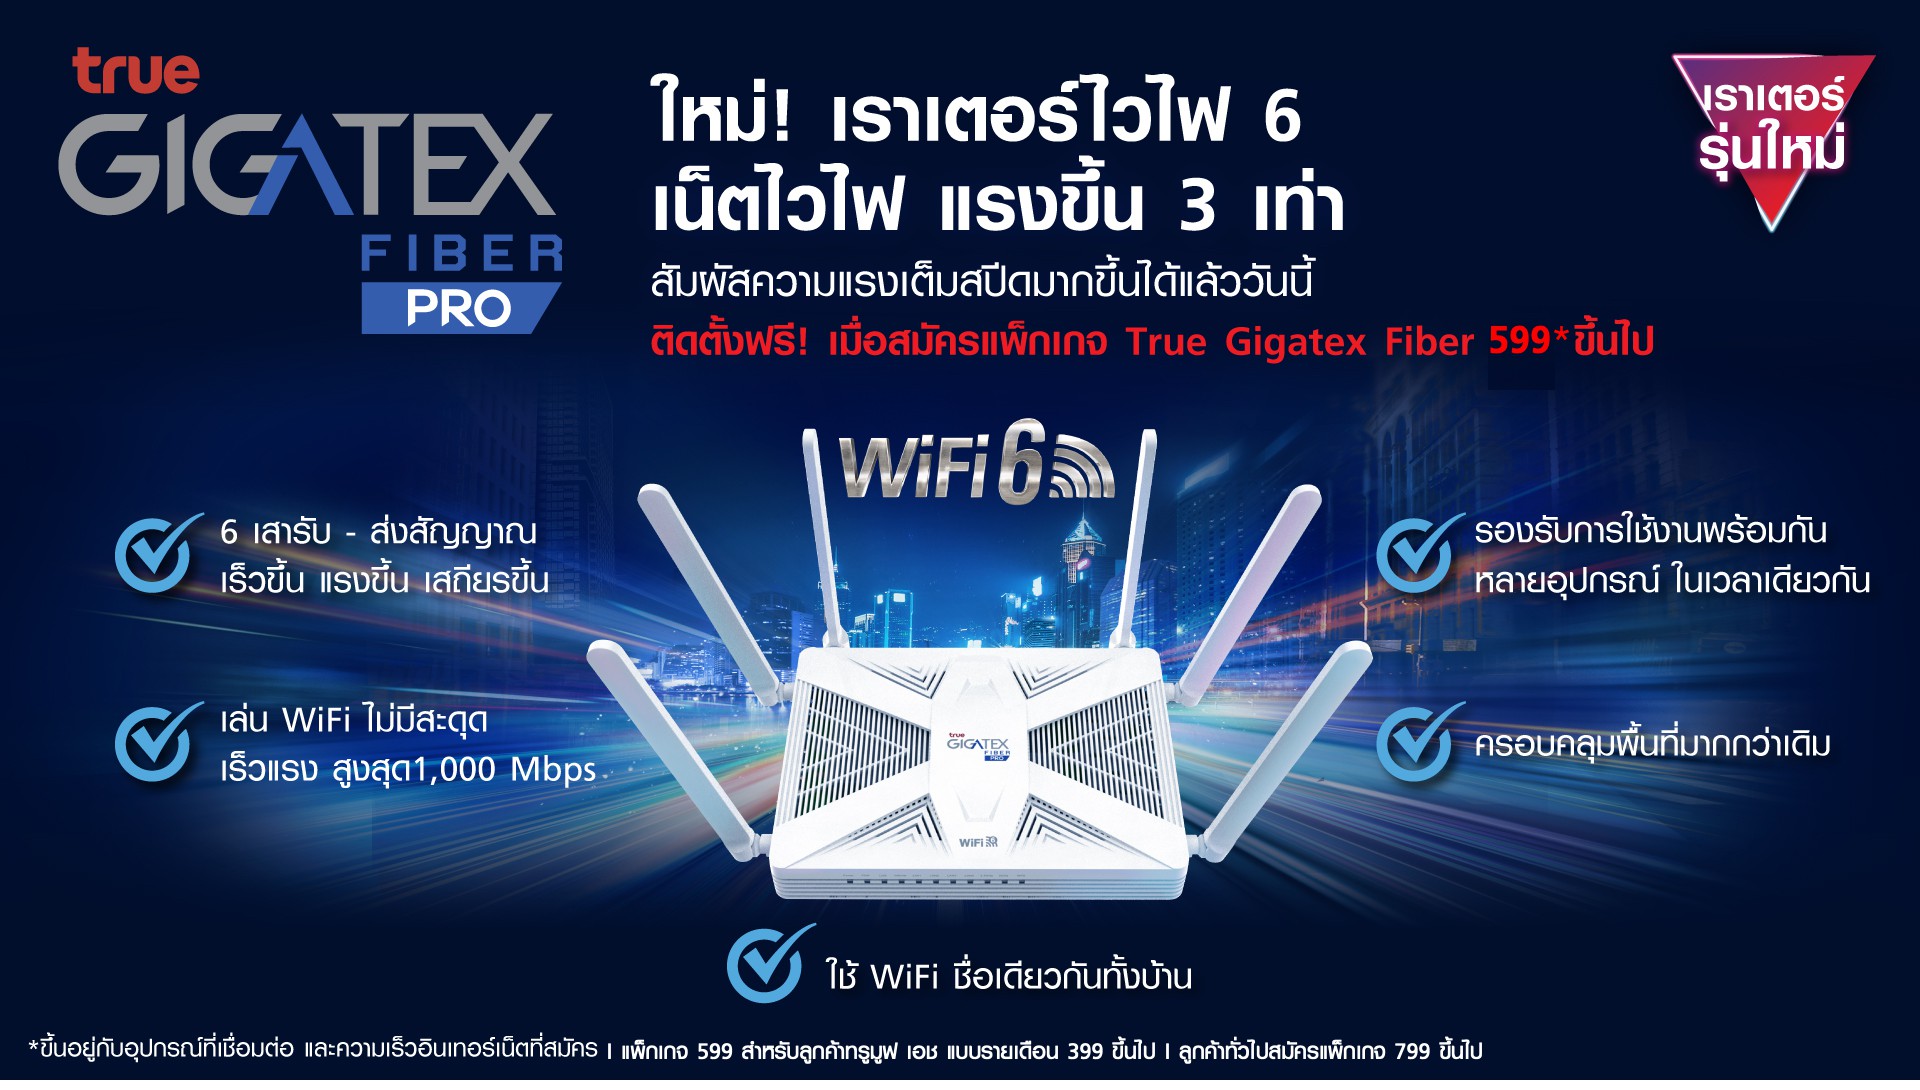 164 2 | 1Gbps | เราเตอร์ True Gigatex Fiber Pro WiFi 6 สำหรับลูกค้าสมัครเน็ตบ้าน TrueOnline พร้อมตัวเสริม Mesh WiFi 6 ให้ครอบคลุมได้ทั่วคฤหาสน์